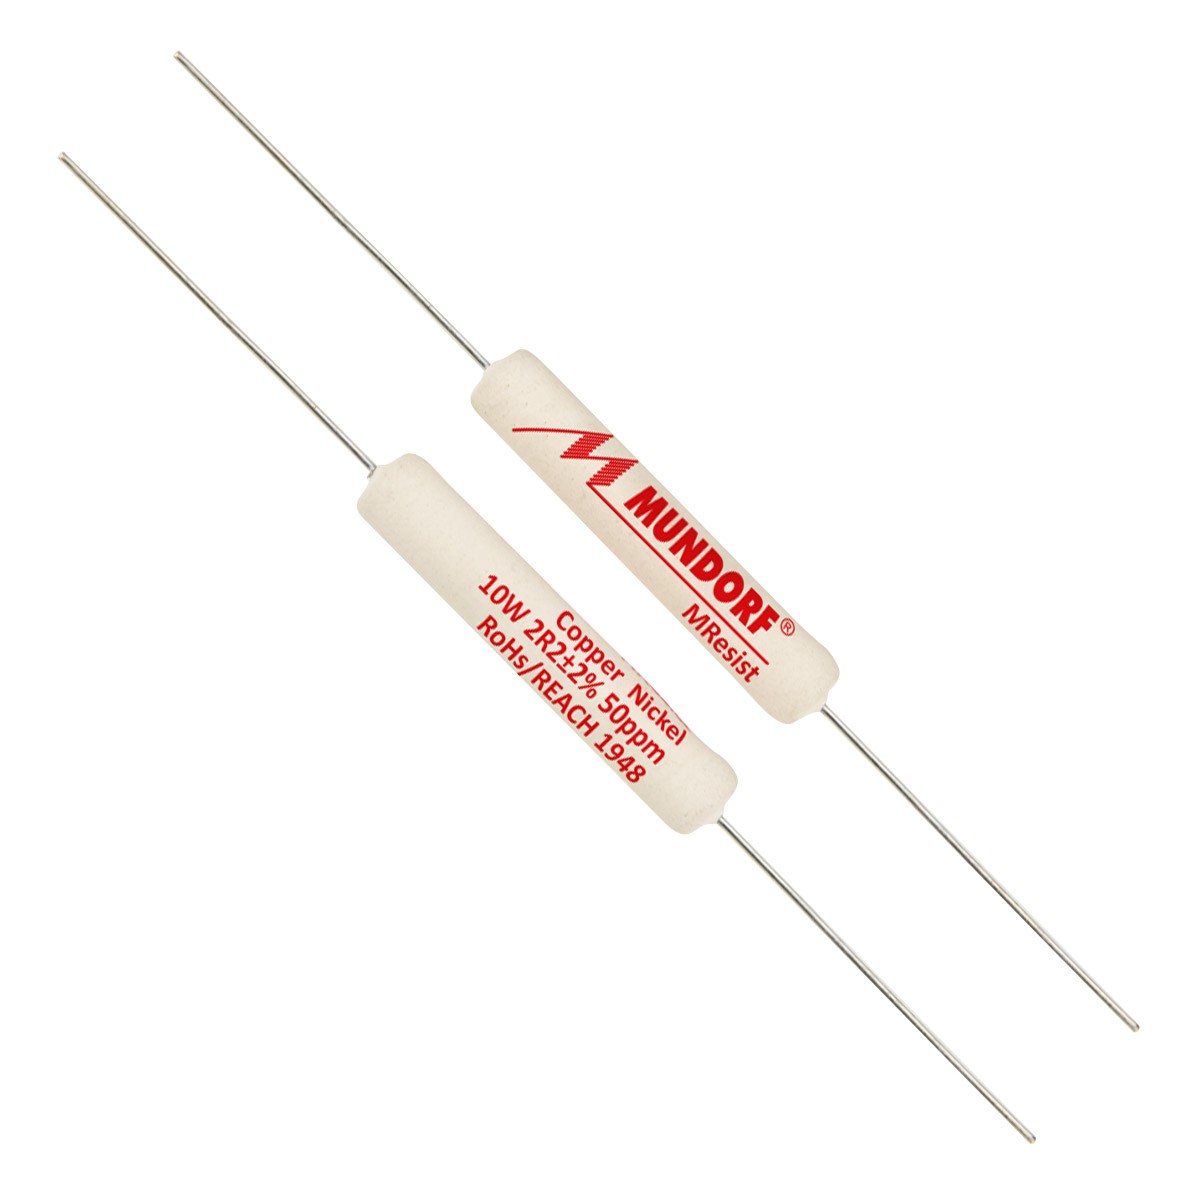 MUNDORF MRESIST CLASSIC Resistor 10W 0.10 Ohm